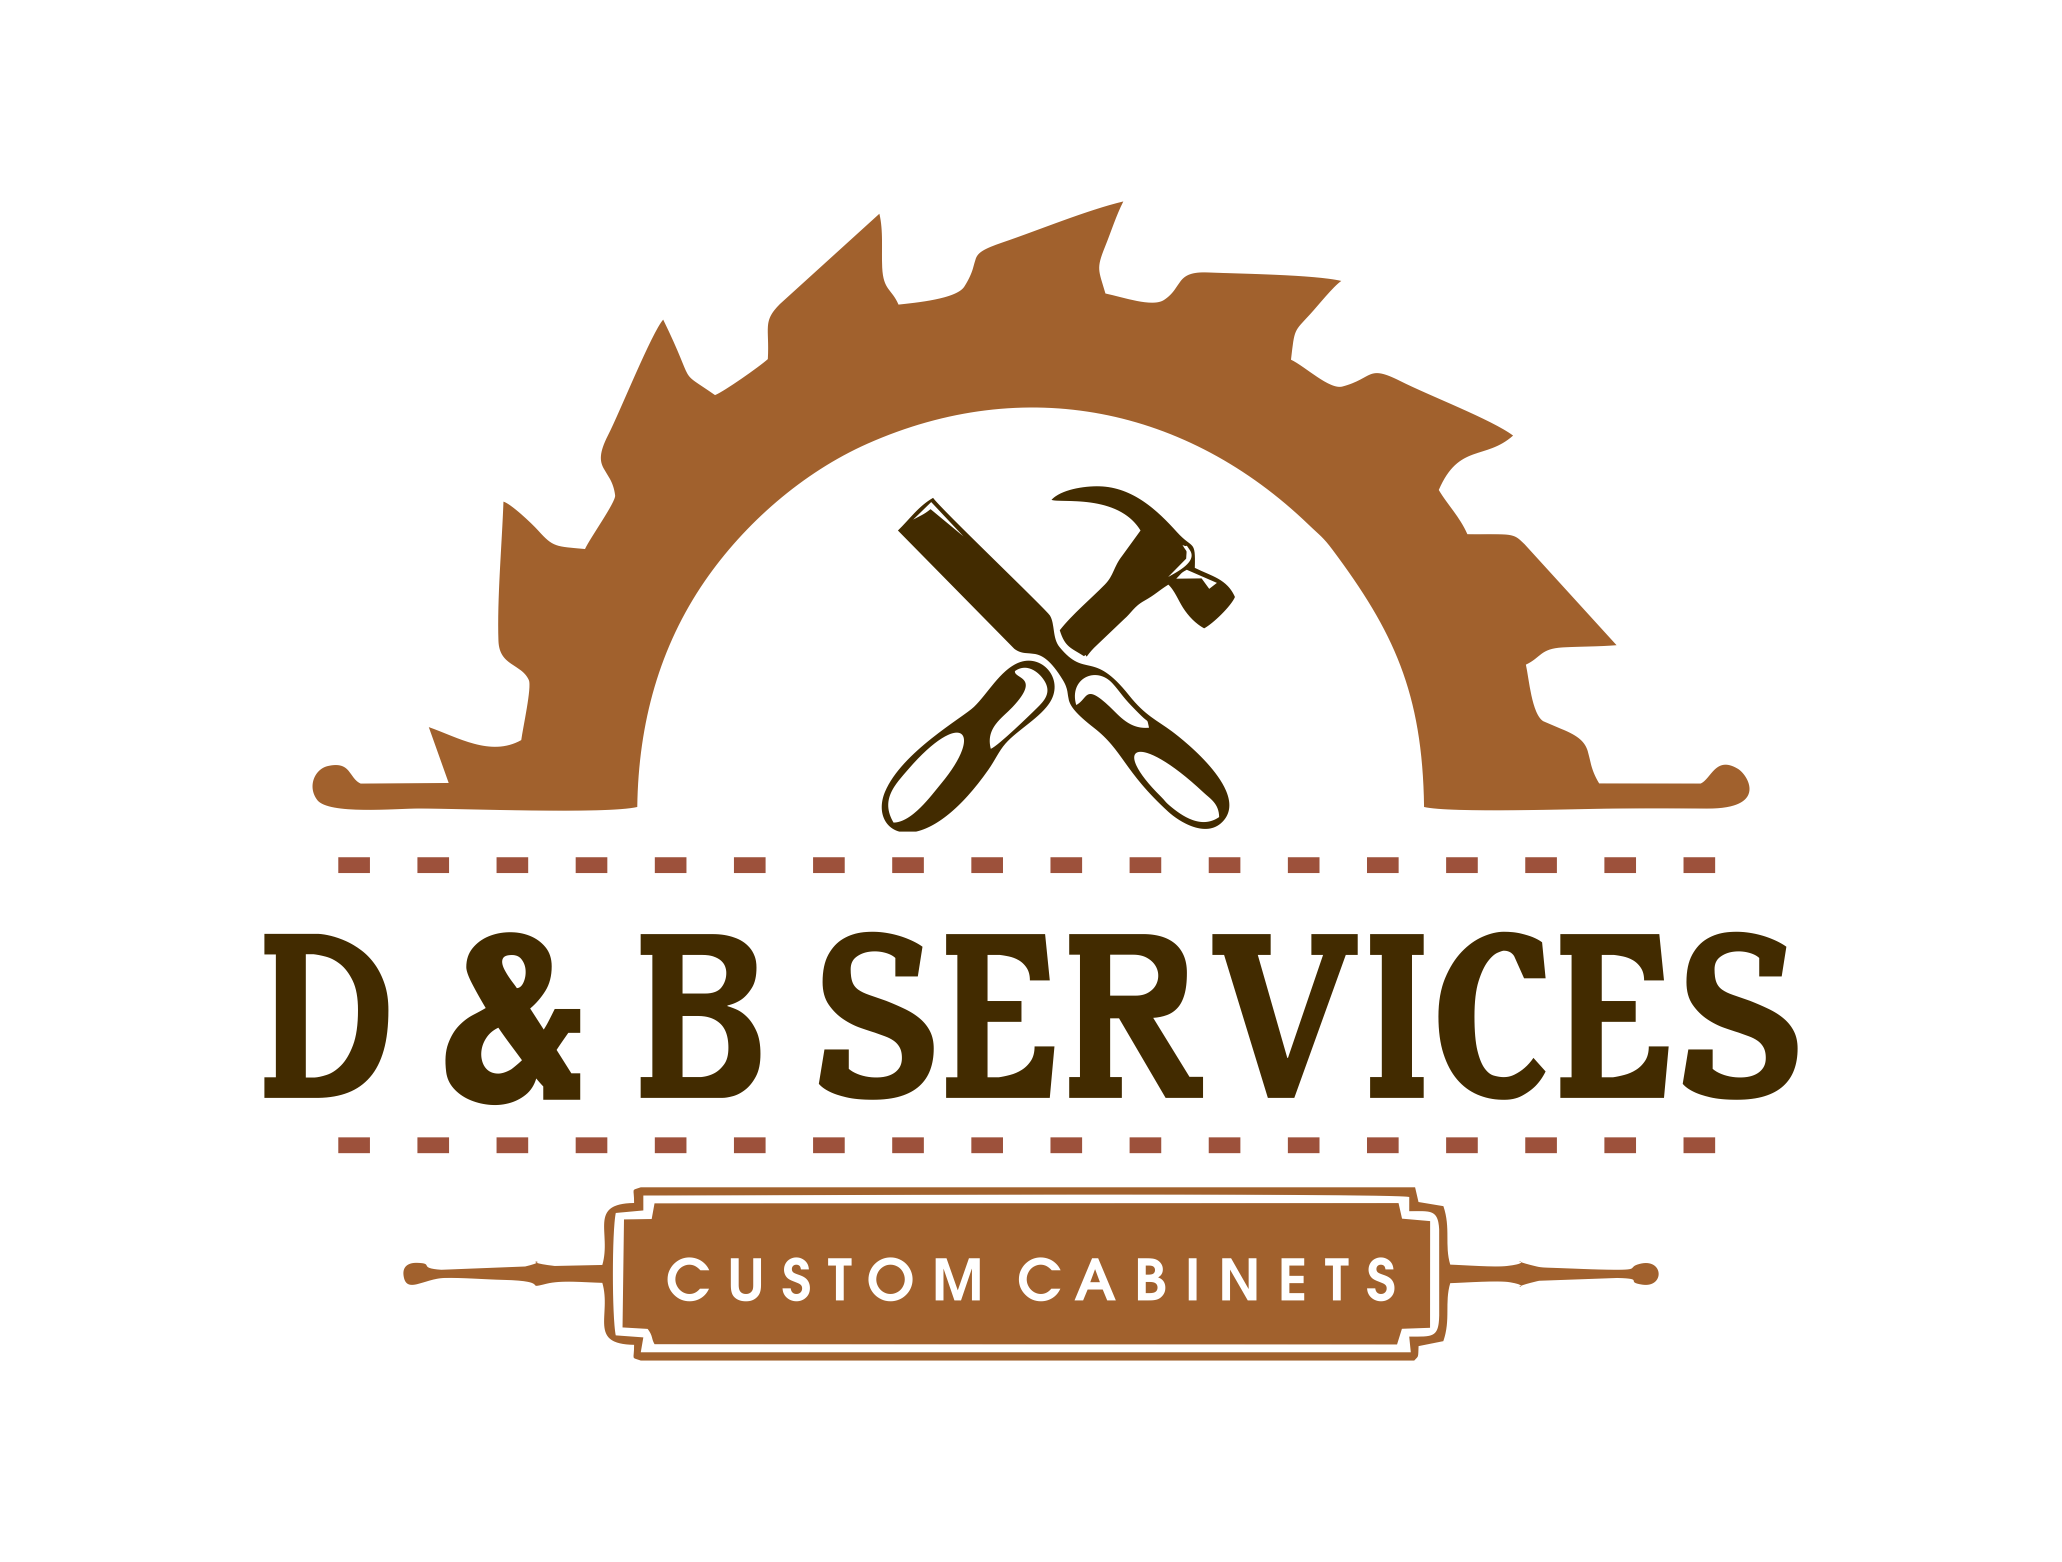 D&B Services Custom Cabinets Logo